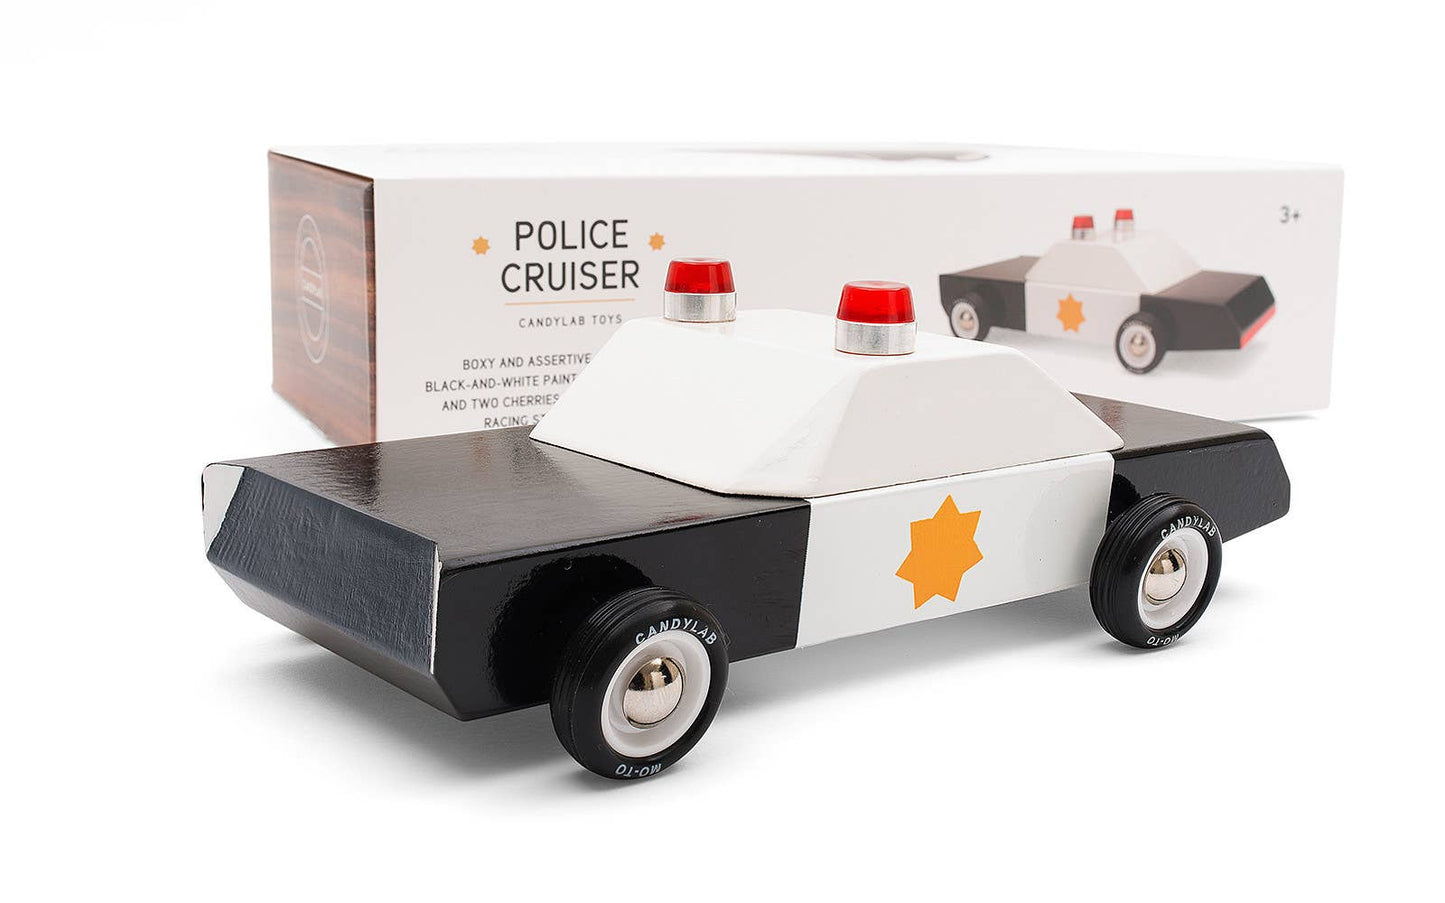 CandyLab Cars - Police Cruiser